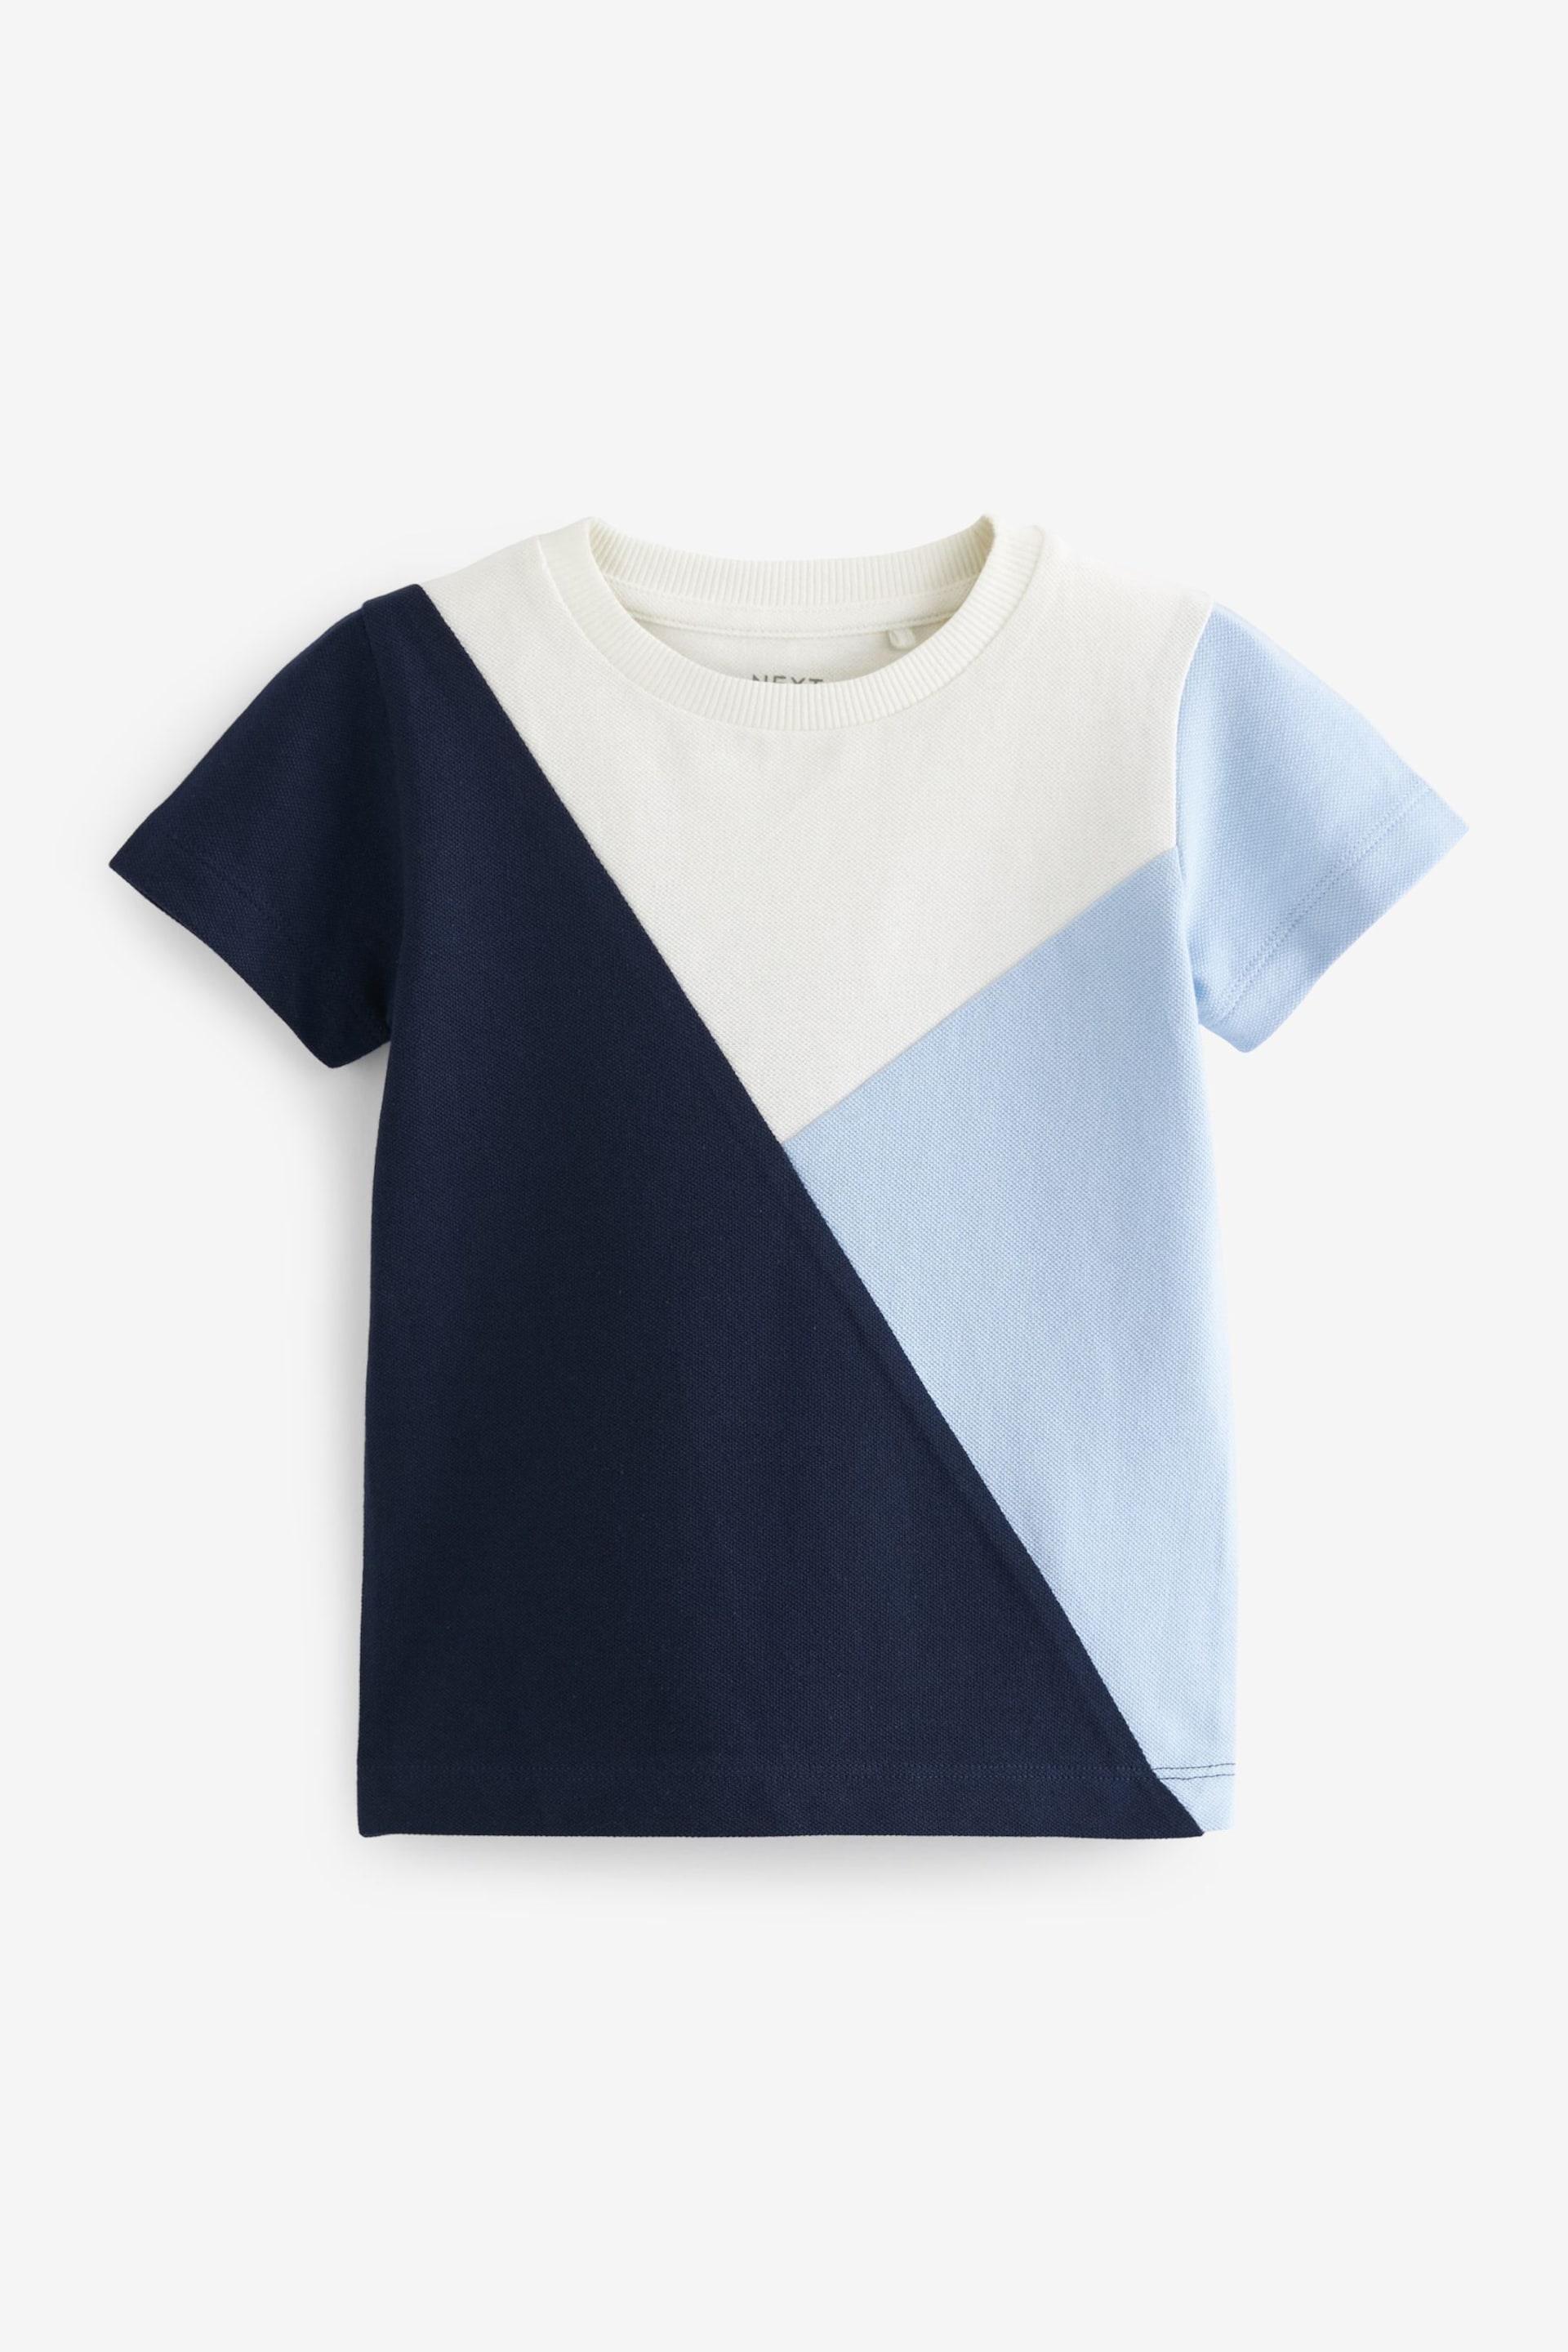 Blue/Navy Short Sleeve Colourblock T-Shirt (3mths-7yrs) - Image 5 of 6